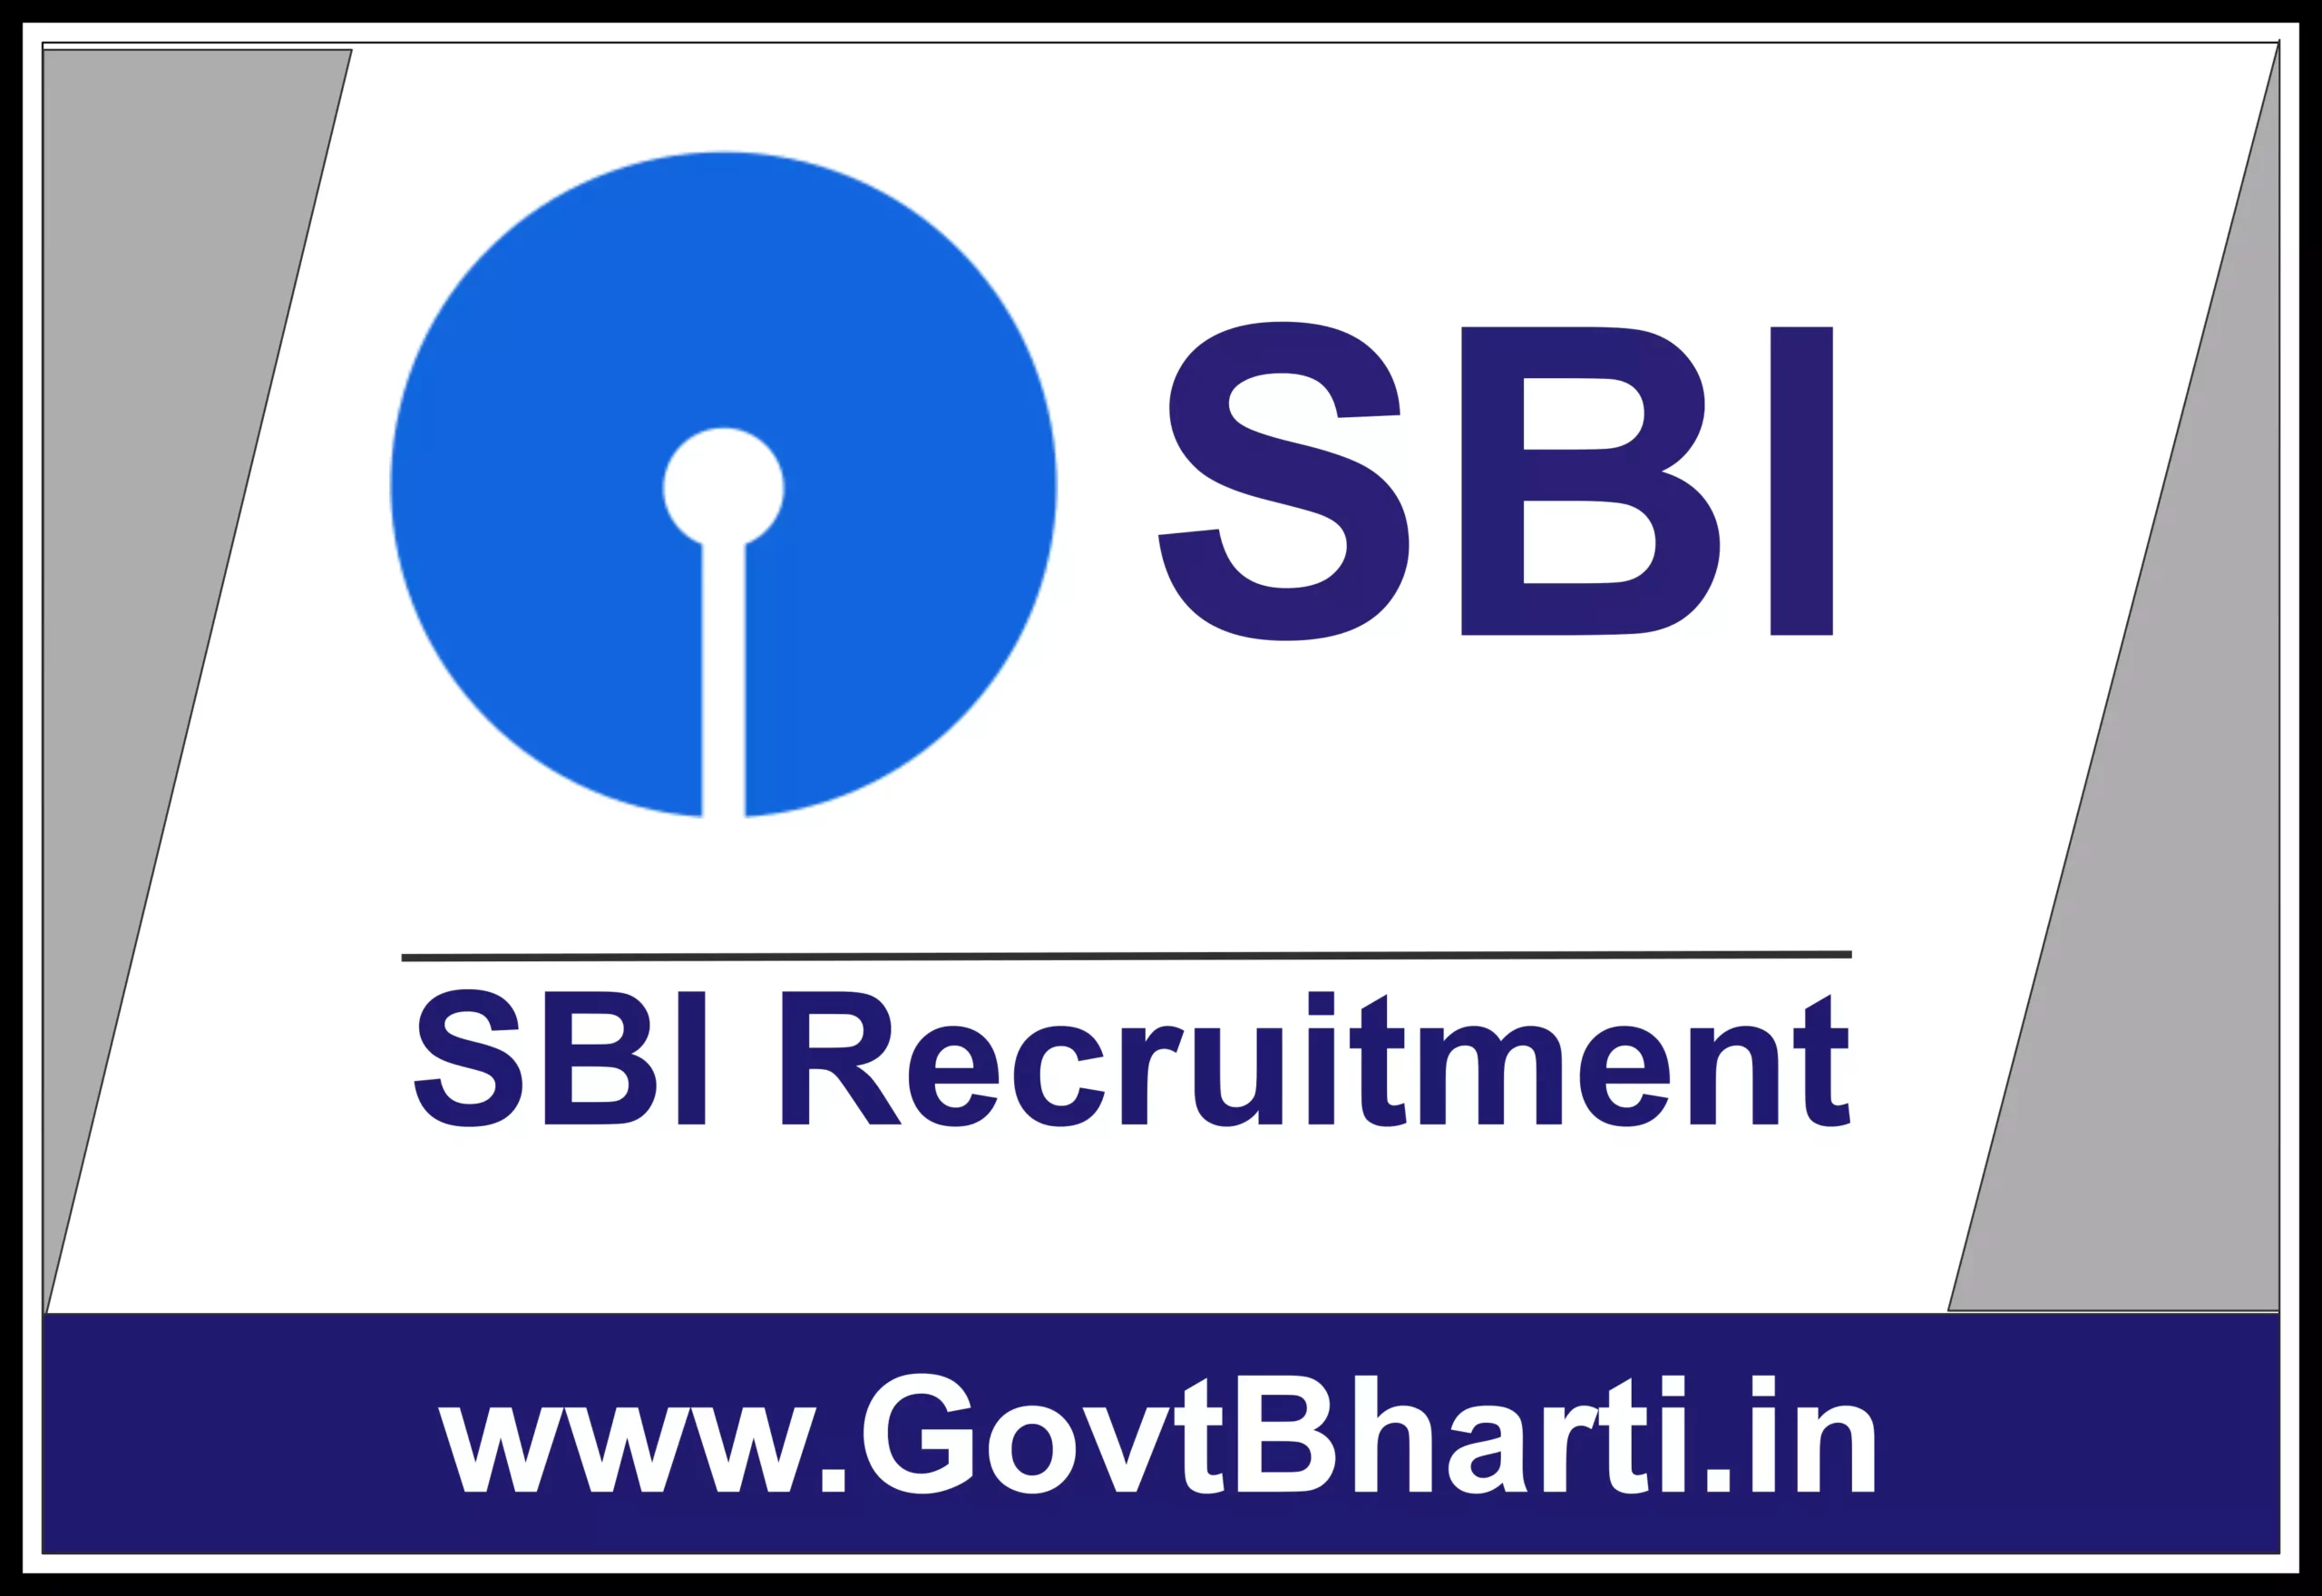 SBI Recruitment apply online now notification